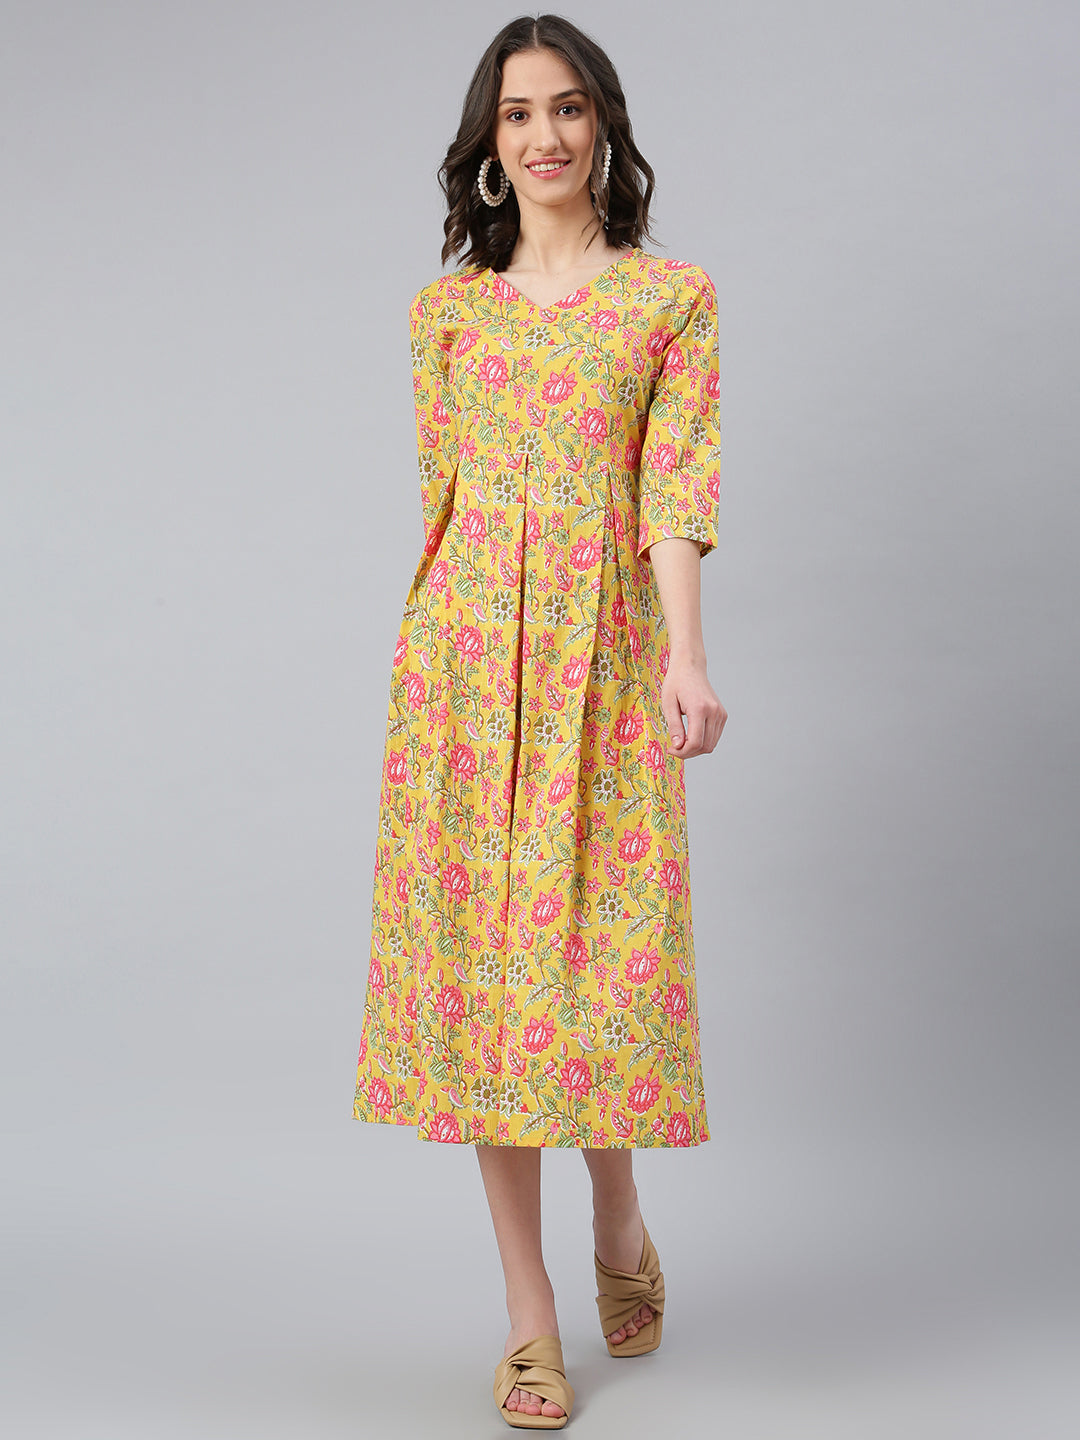 Idalia Yellow Printed Floral Dress